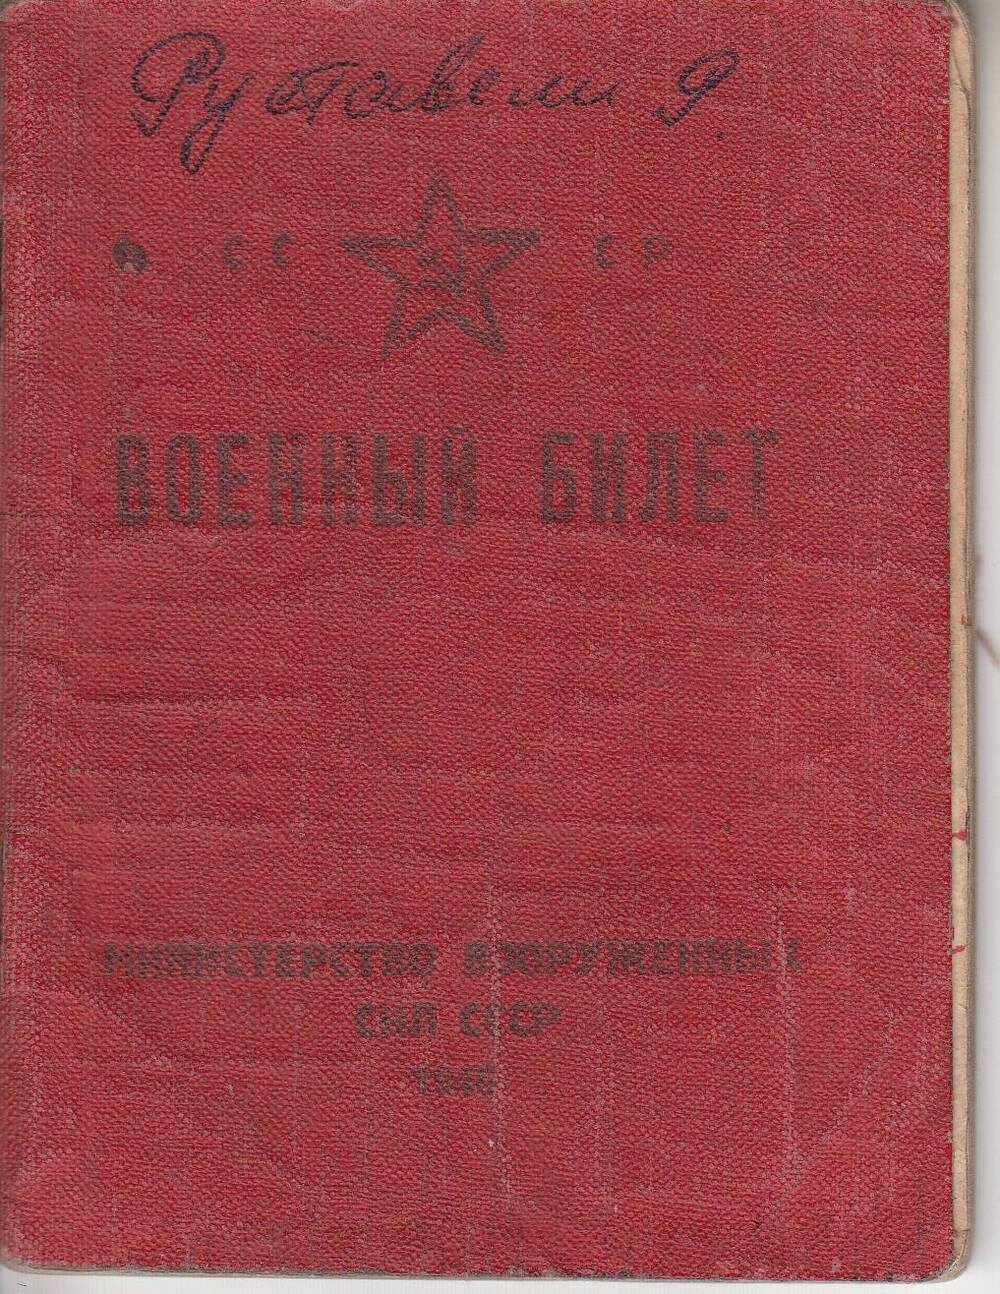 Военный билет на имя Волобуева Федора Ефимовича (1914 г.р).